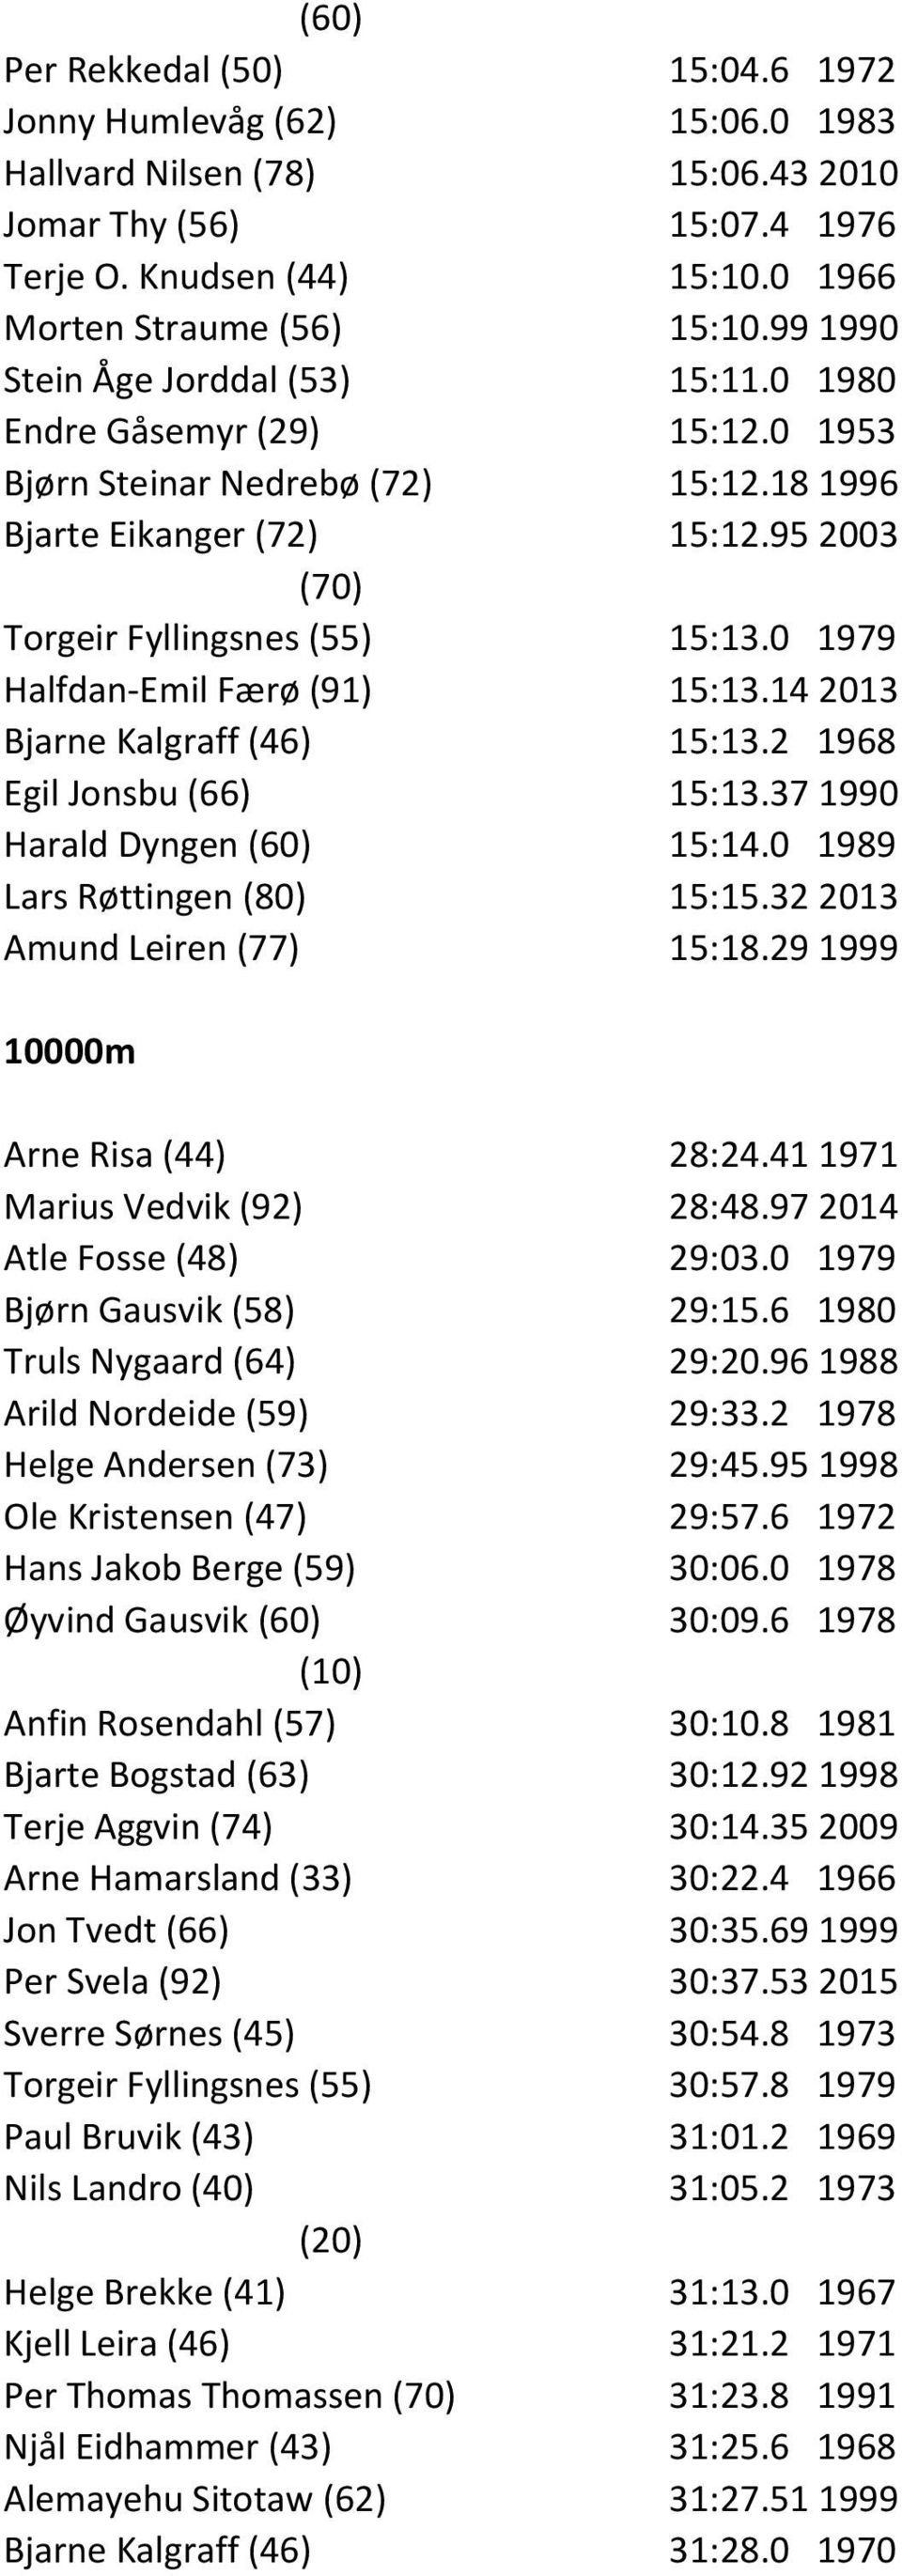 0 1979 Halfdan-Emil Færø (91) 15:13.14 2013 Bjarne Kalgraff (46) 15:13.2 1968 Egil Jonsbu (66) 15:13.37 1990 Harald Dyngen (60) 15:14.0 1989 Lars Røttingen (80) 15:15.32 2013 Amund Leiren (77) 15:18.